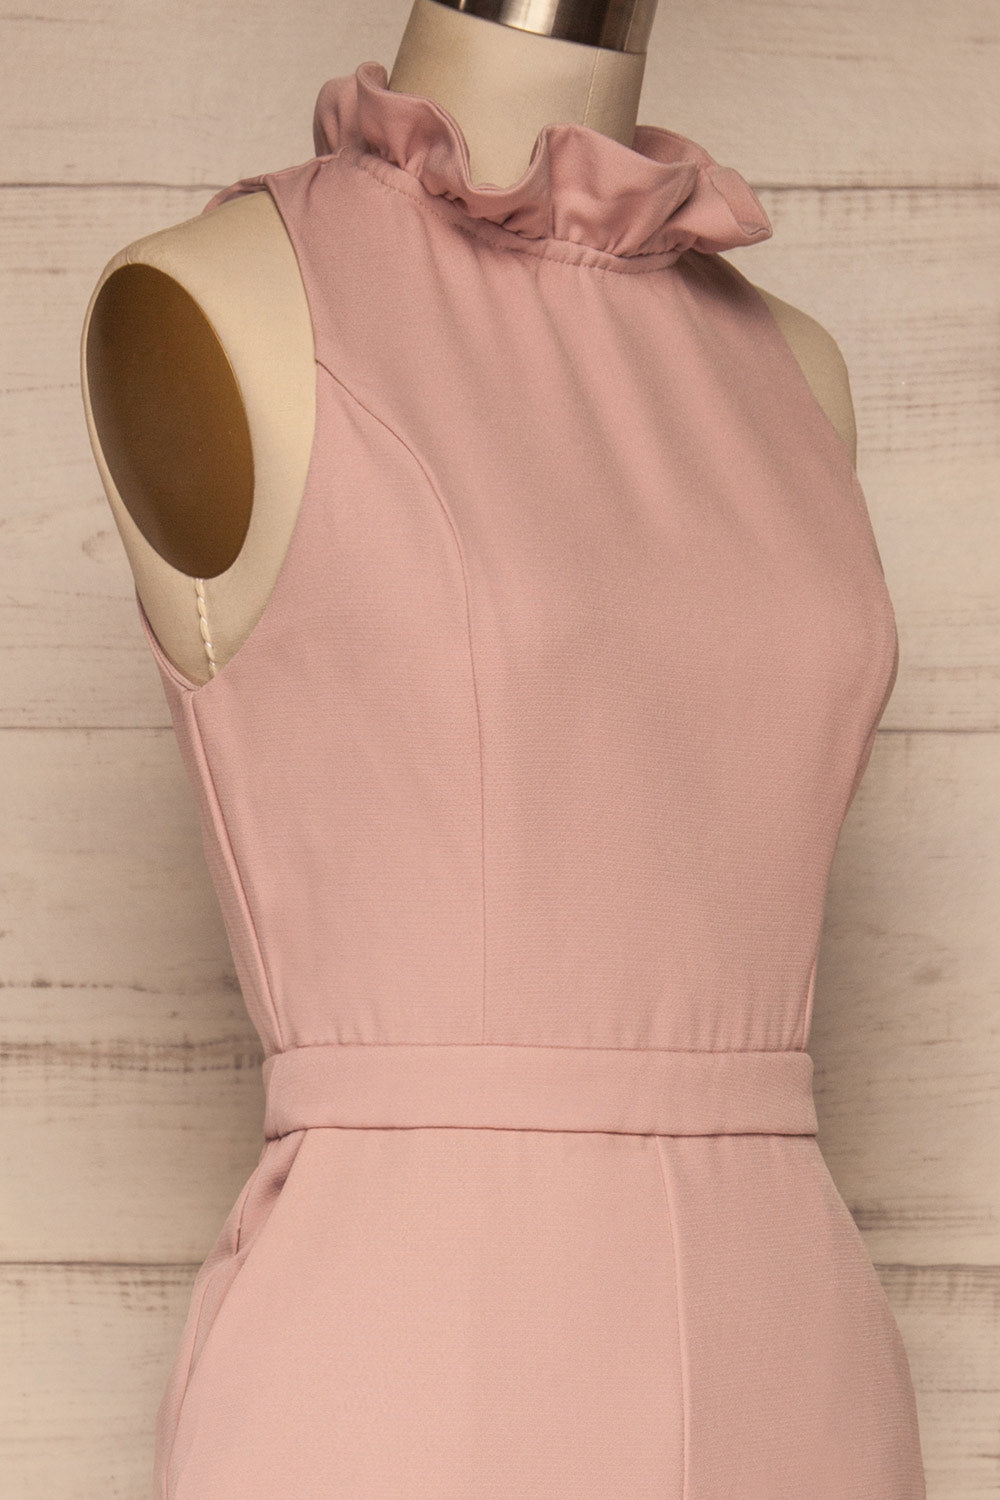 Delft Rose Pink Jumpsuit w/ Stand Collar side close up | La Petite Garçonne